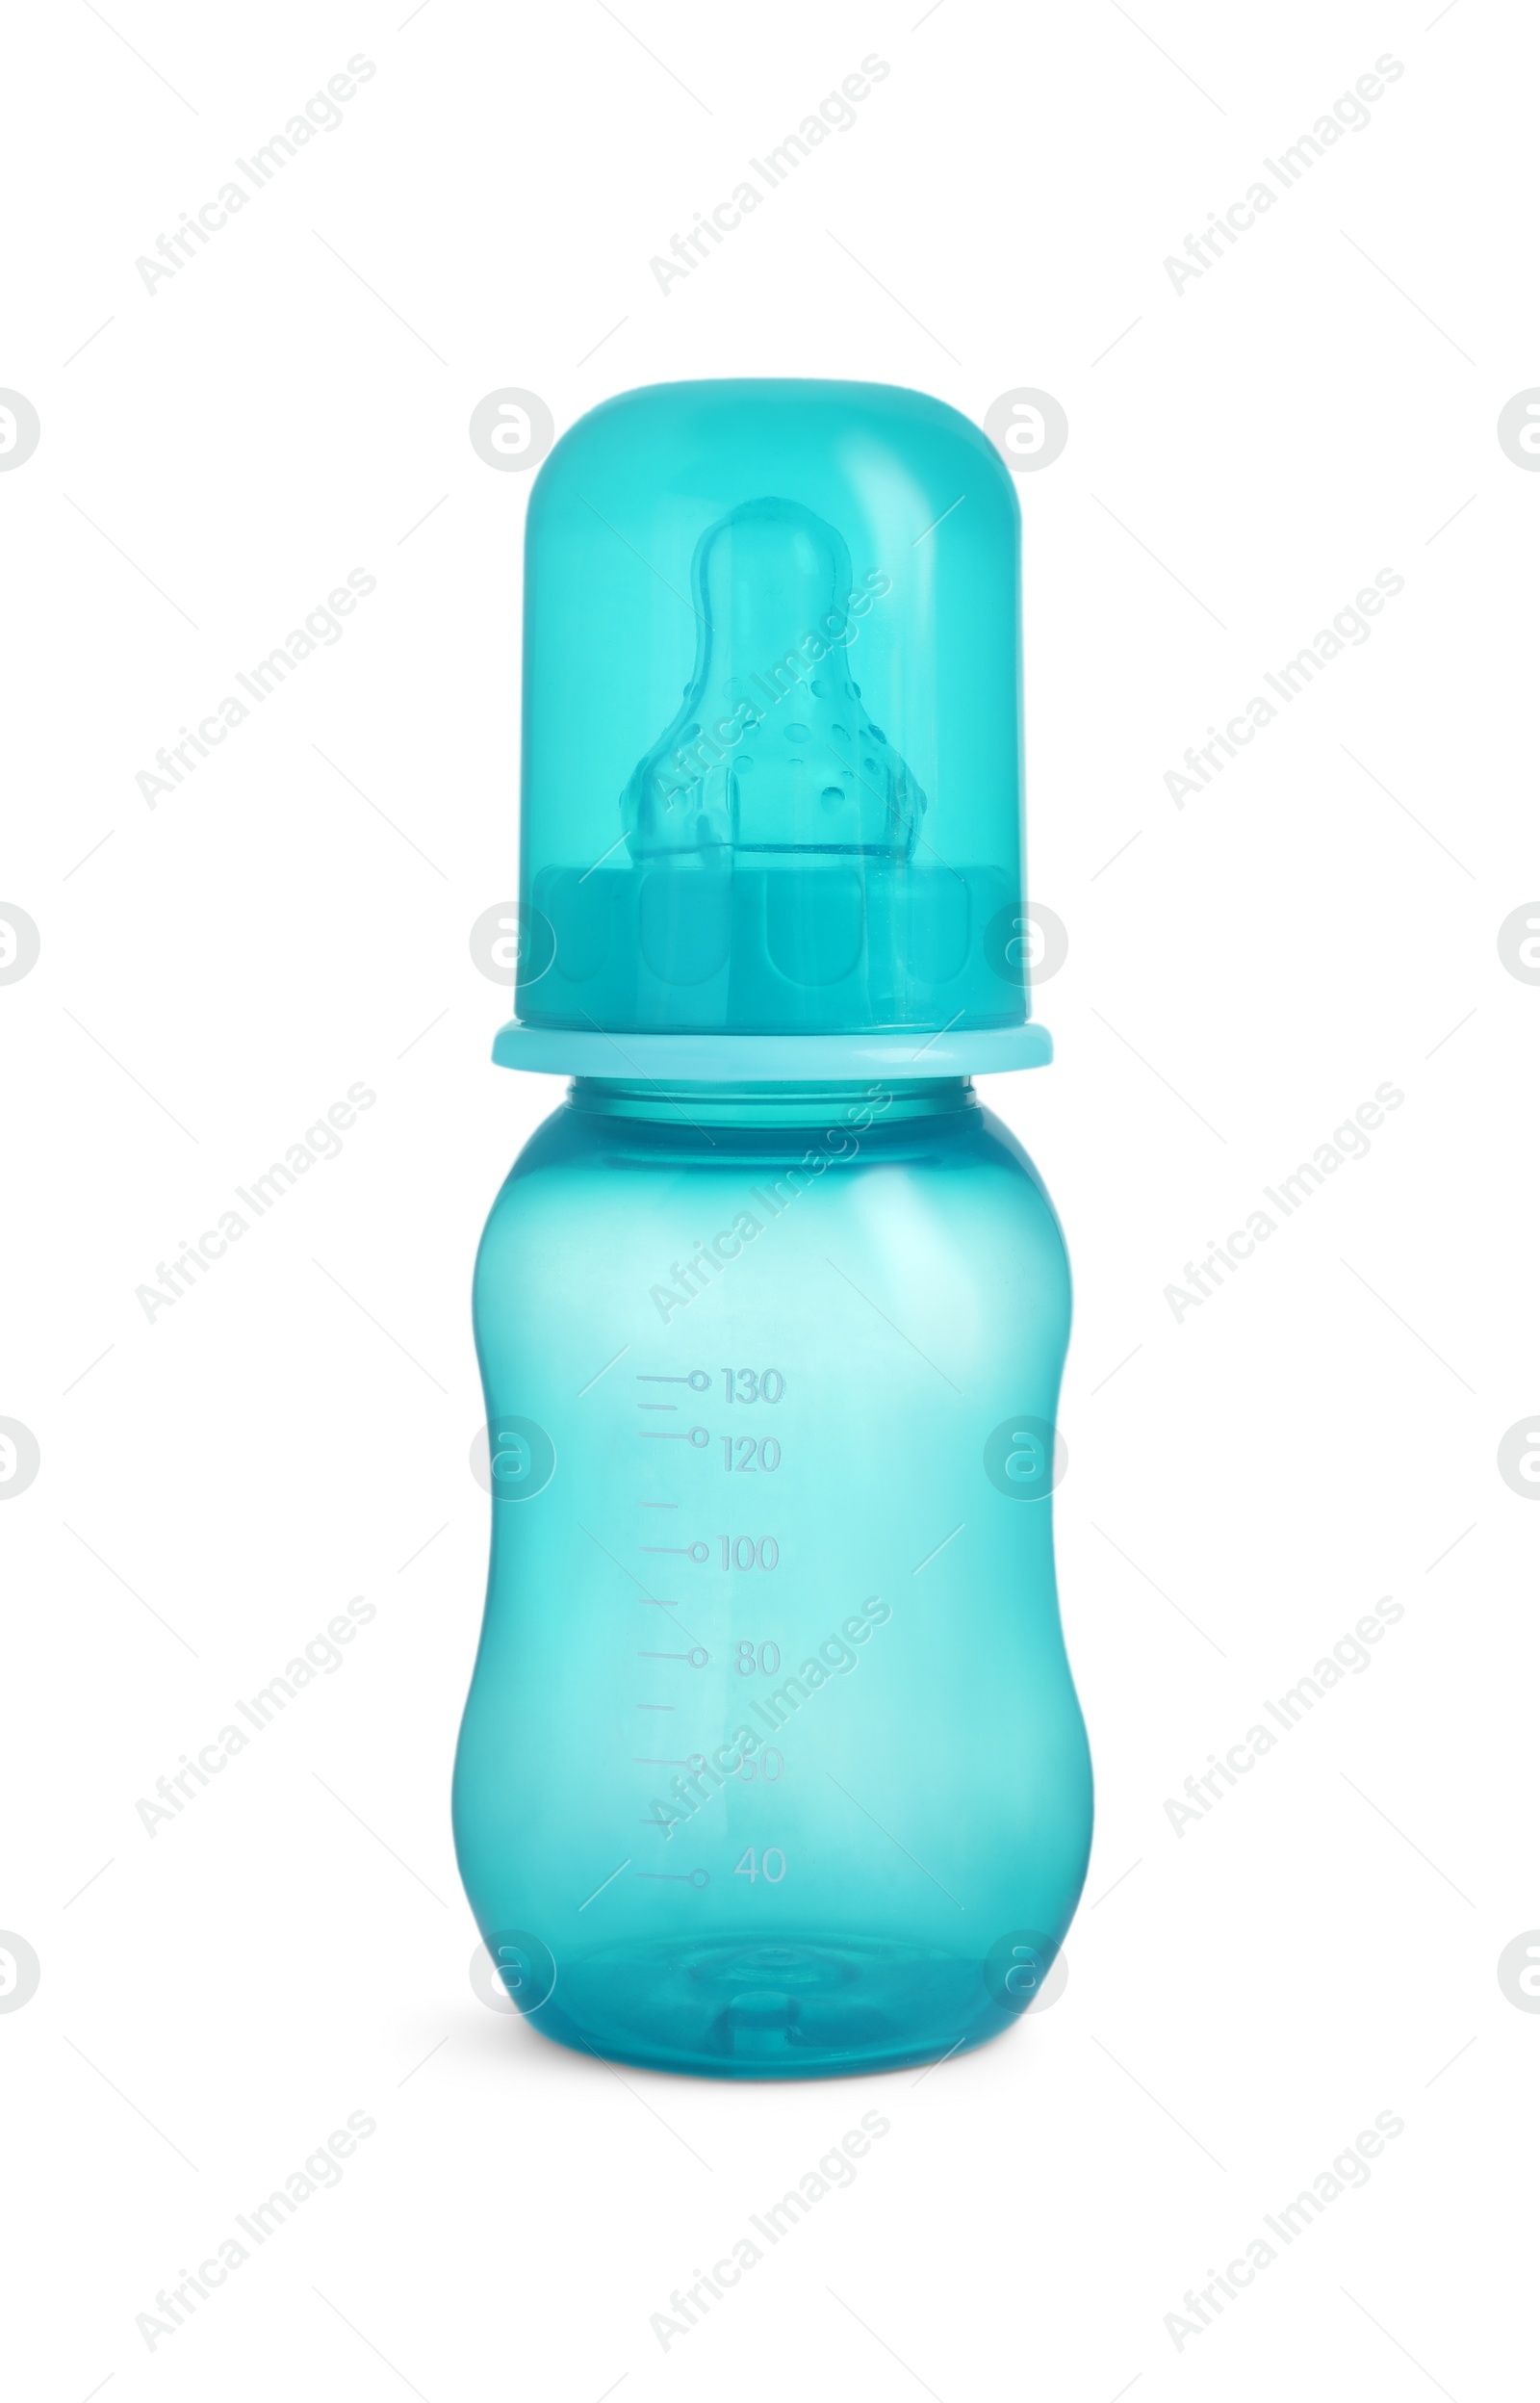 Photo of Empty turquoise feeding bottle for baby milk isolated on white